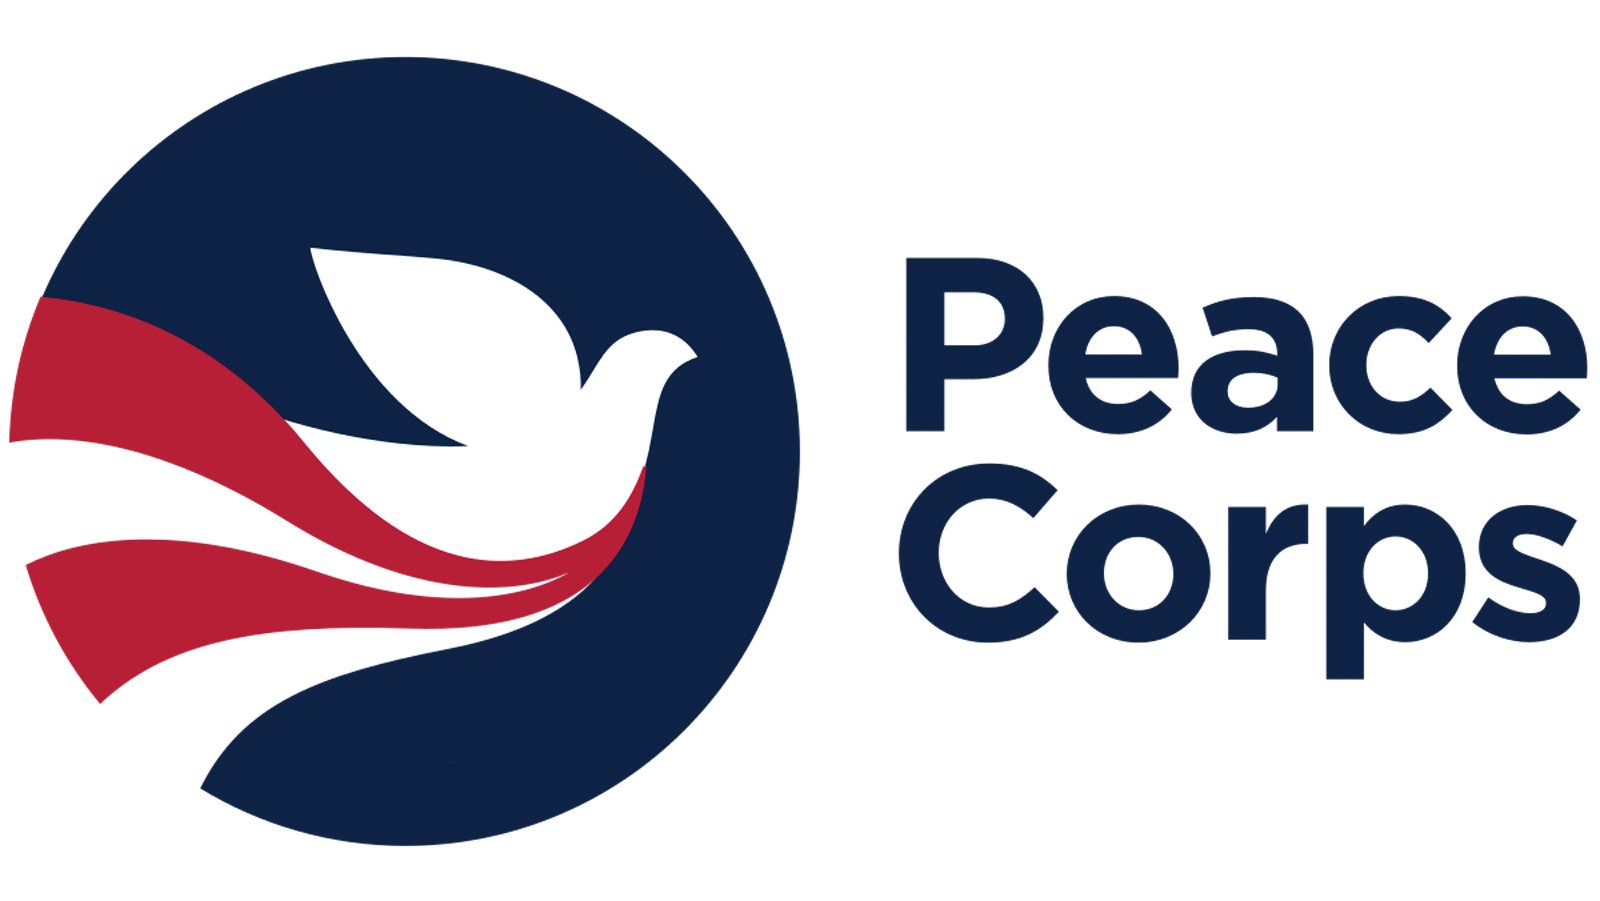 Peacce Corps Logo